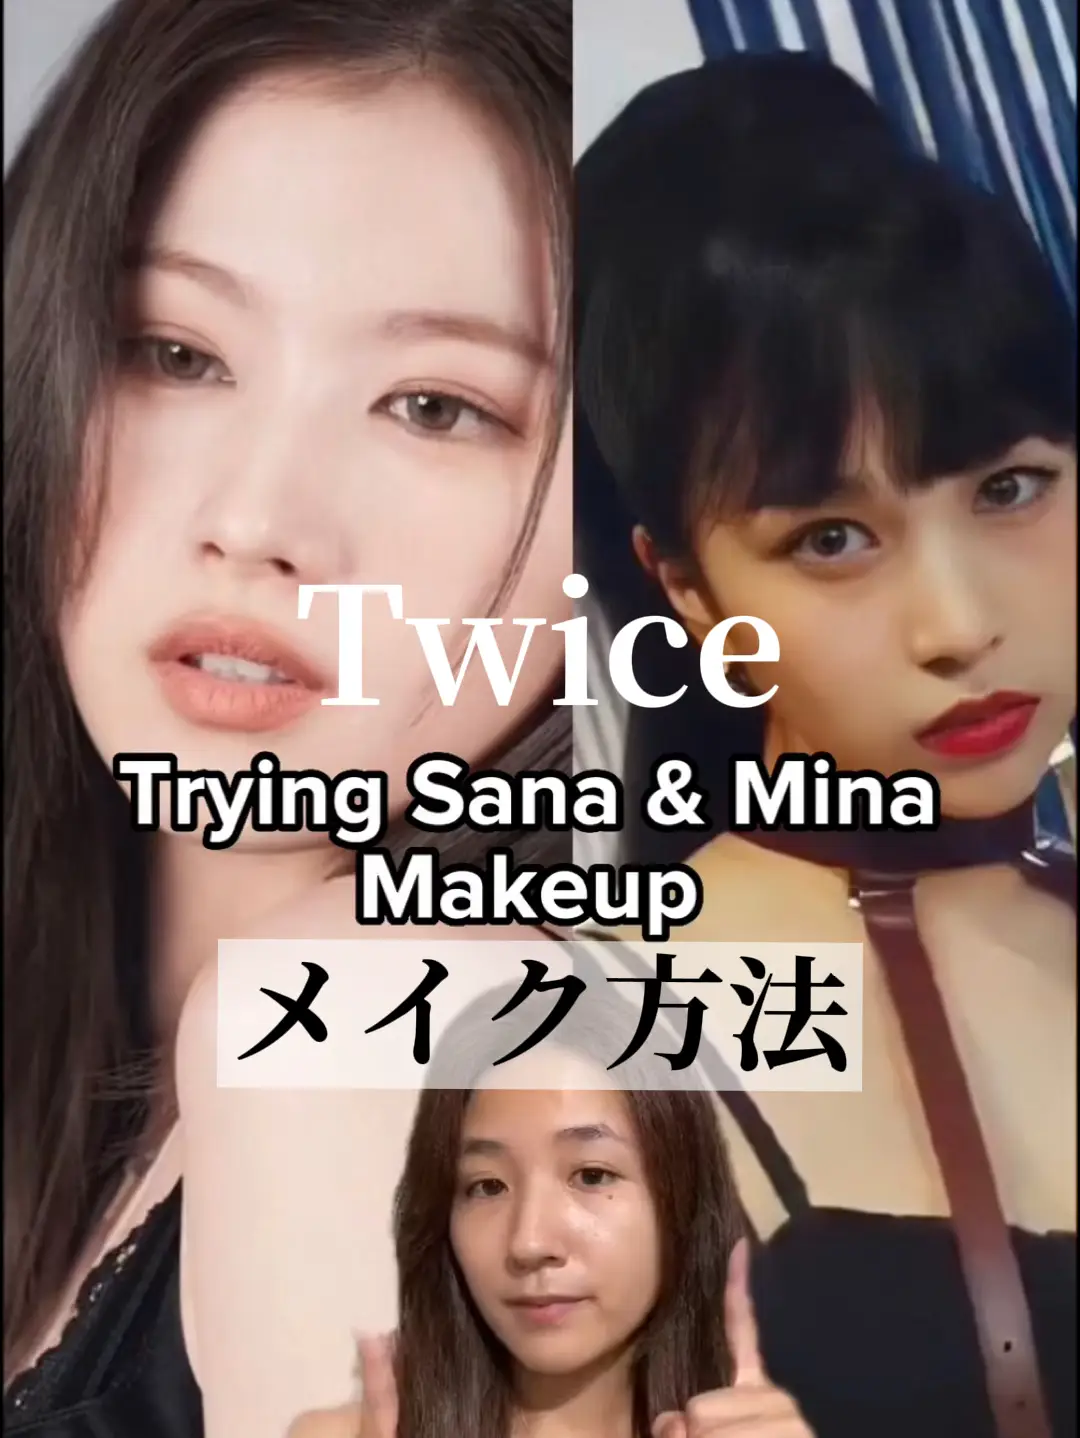 TWICE Nayeon Make-Up in Recent Instagram Receives Split Reviews